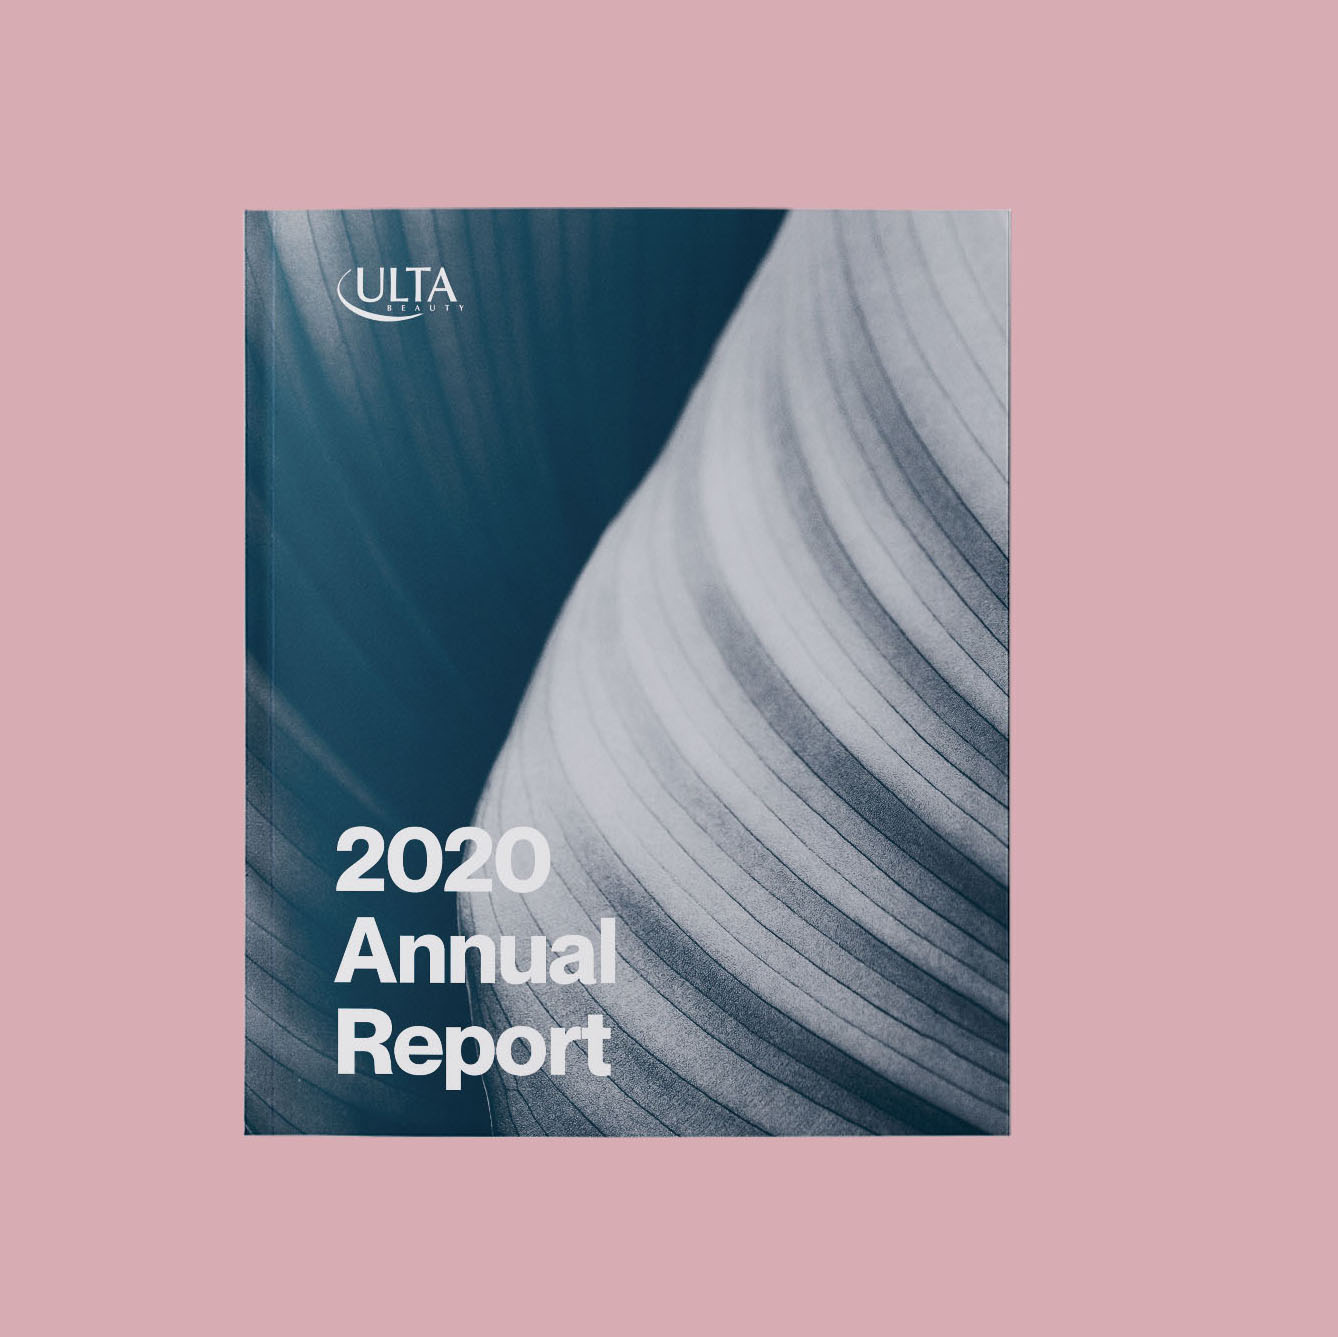 Ulta Annual Report